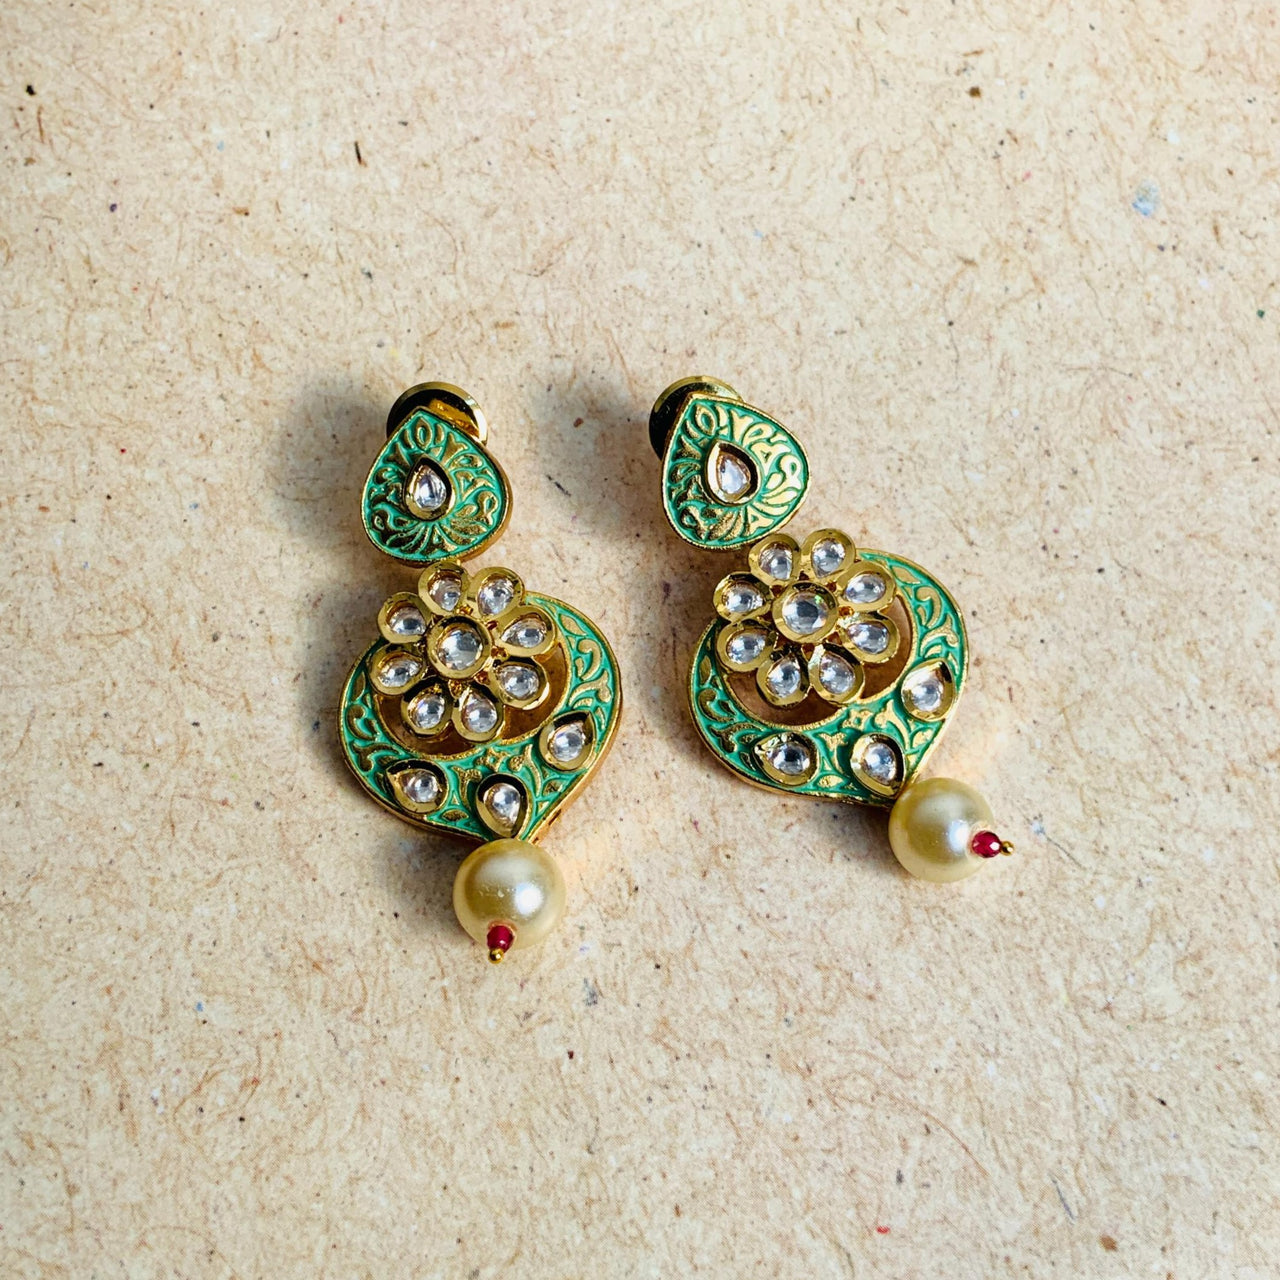 Charming Kundan Necklace & Earring - Abdesignsjewellery